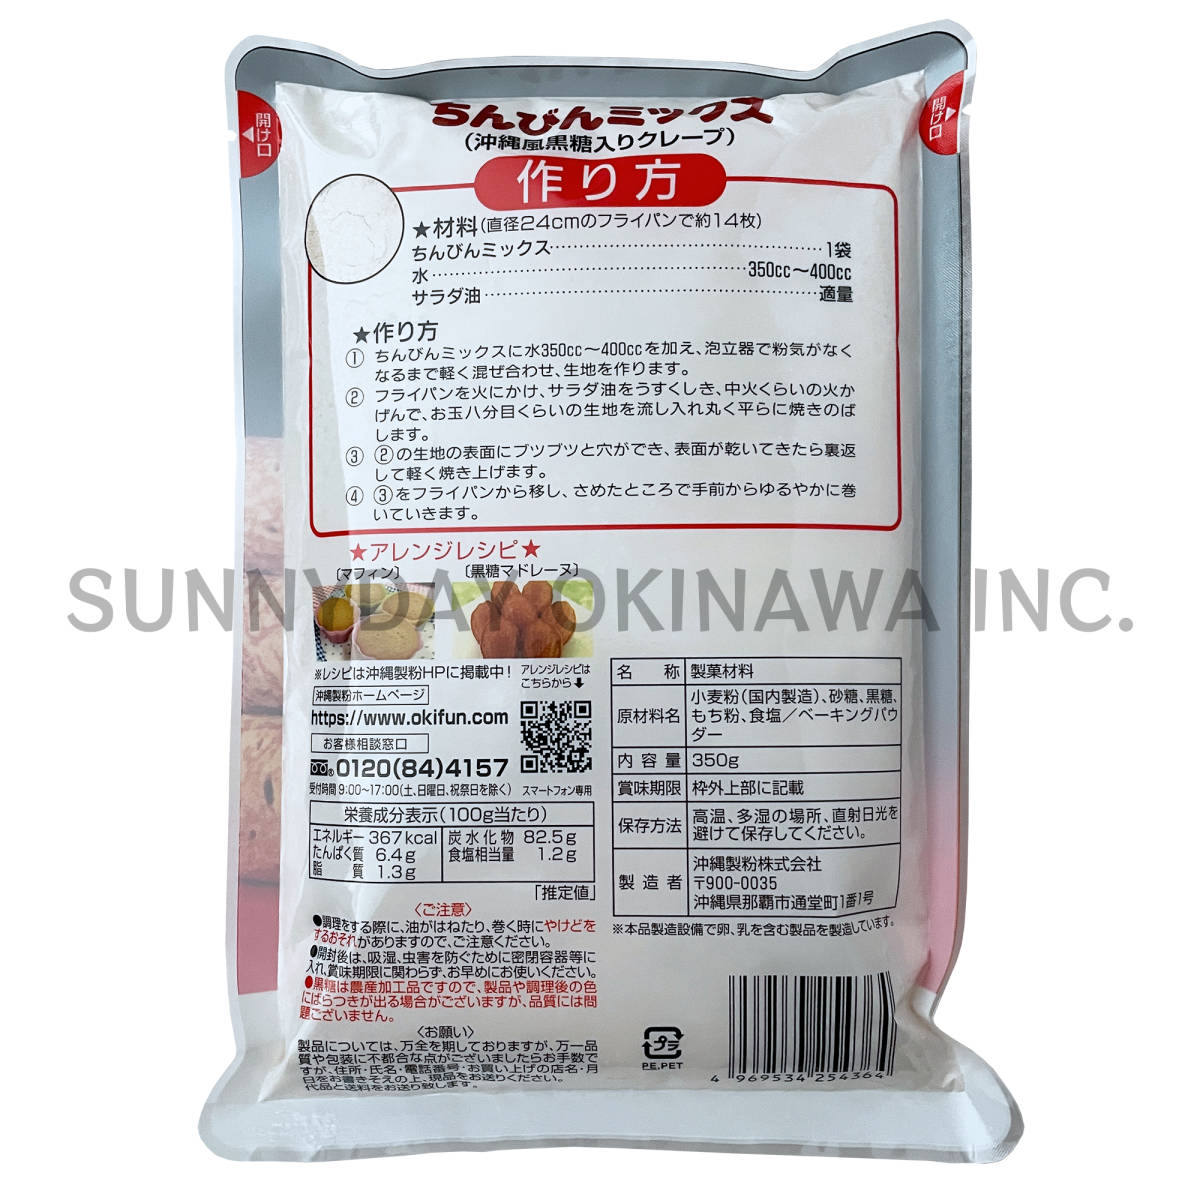 sa-ta- under gi- Mix 3 sack set plain .. bin . corm Okinawa made flour mixed flour . earth production your order 